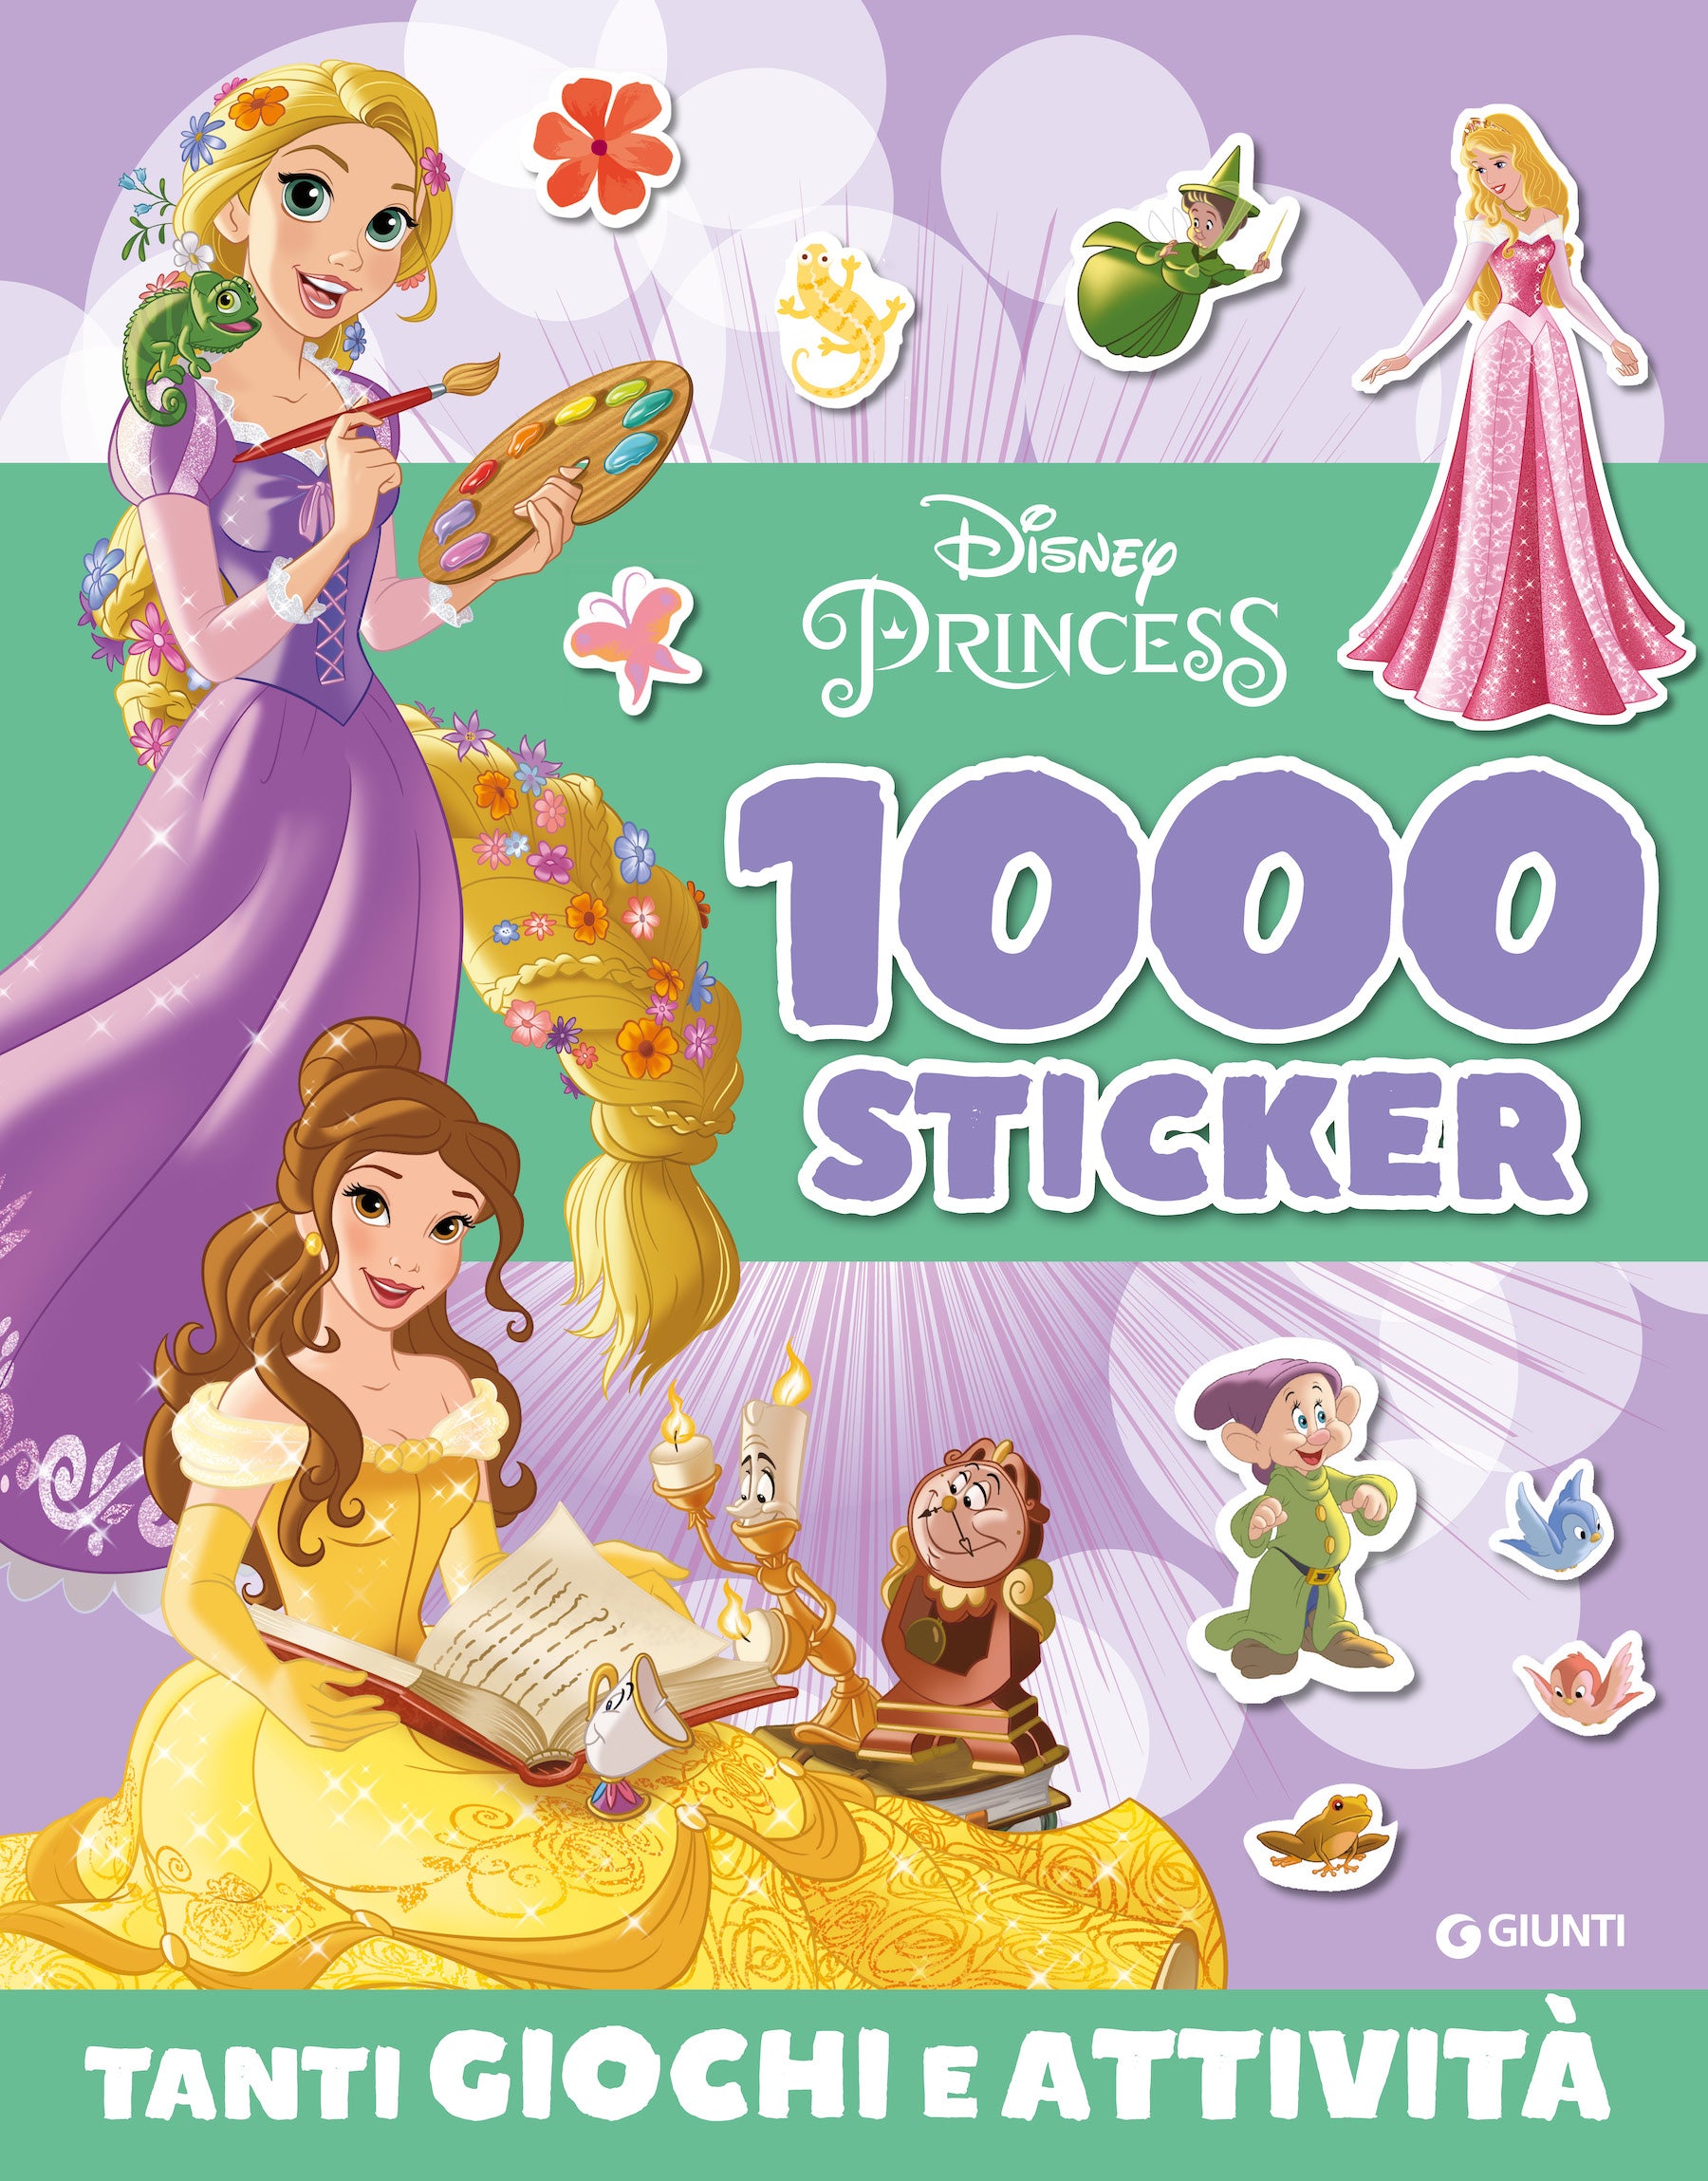 Disney Princesses - 1000 stickers - Princesses - Walt Disney